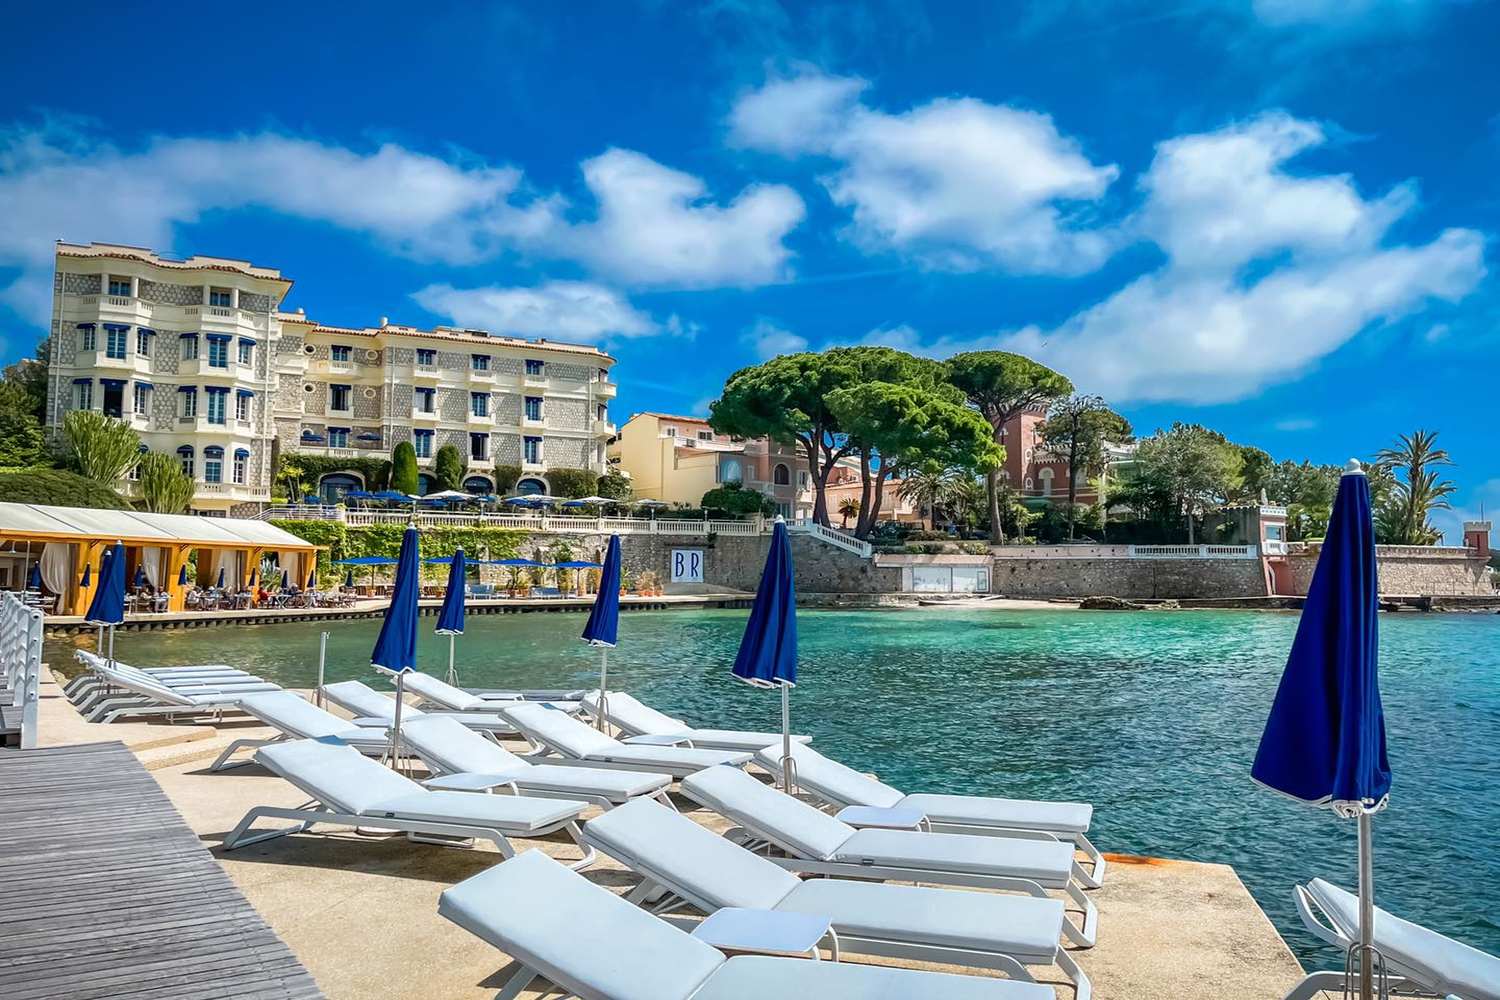 Hotel Belle Rives Antibes, Cote d'Azur - France